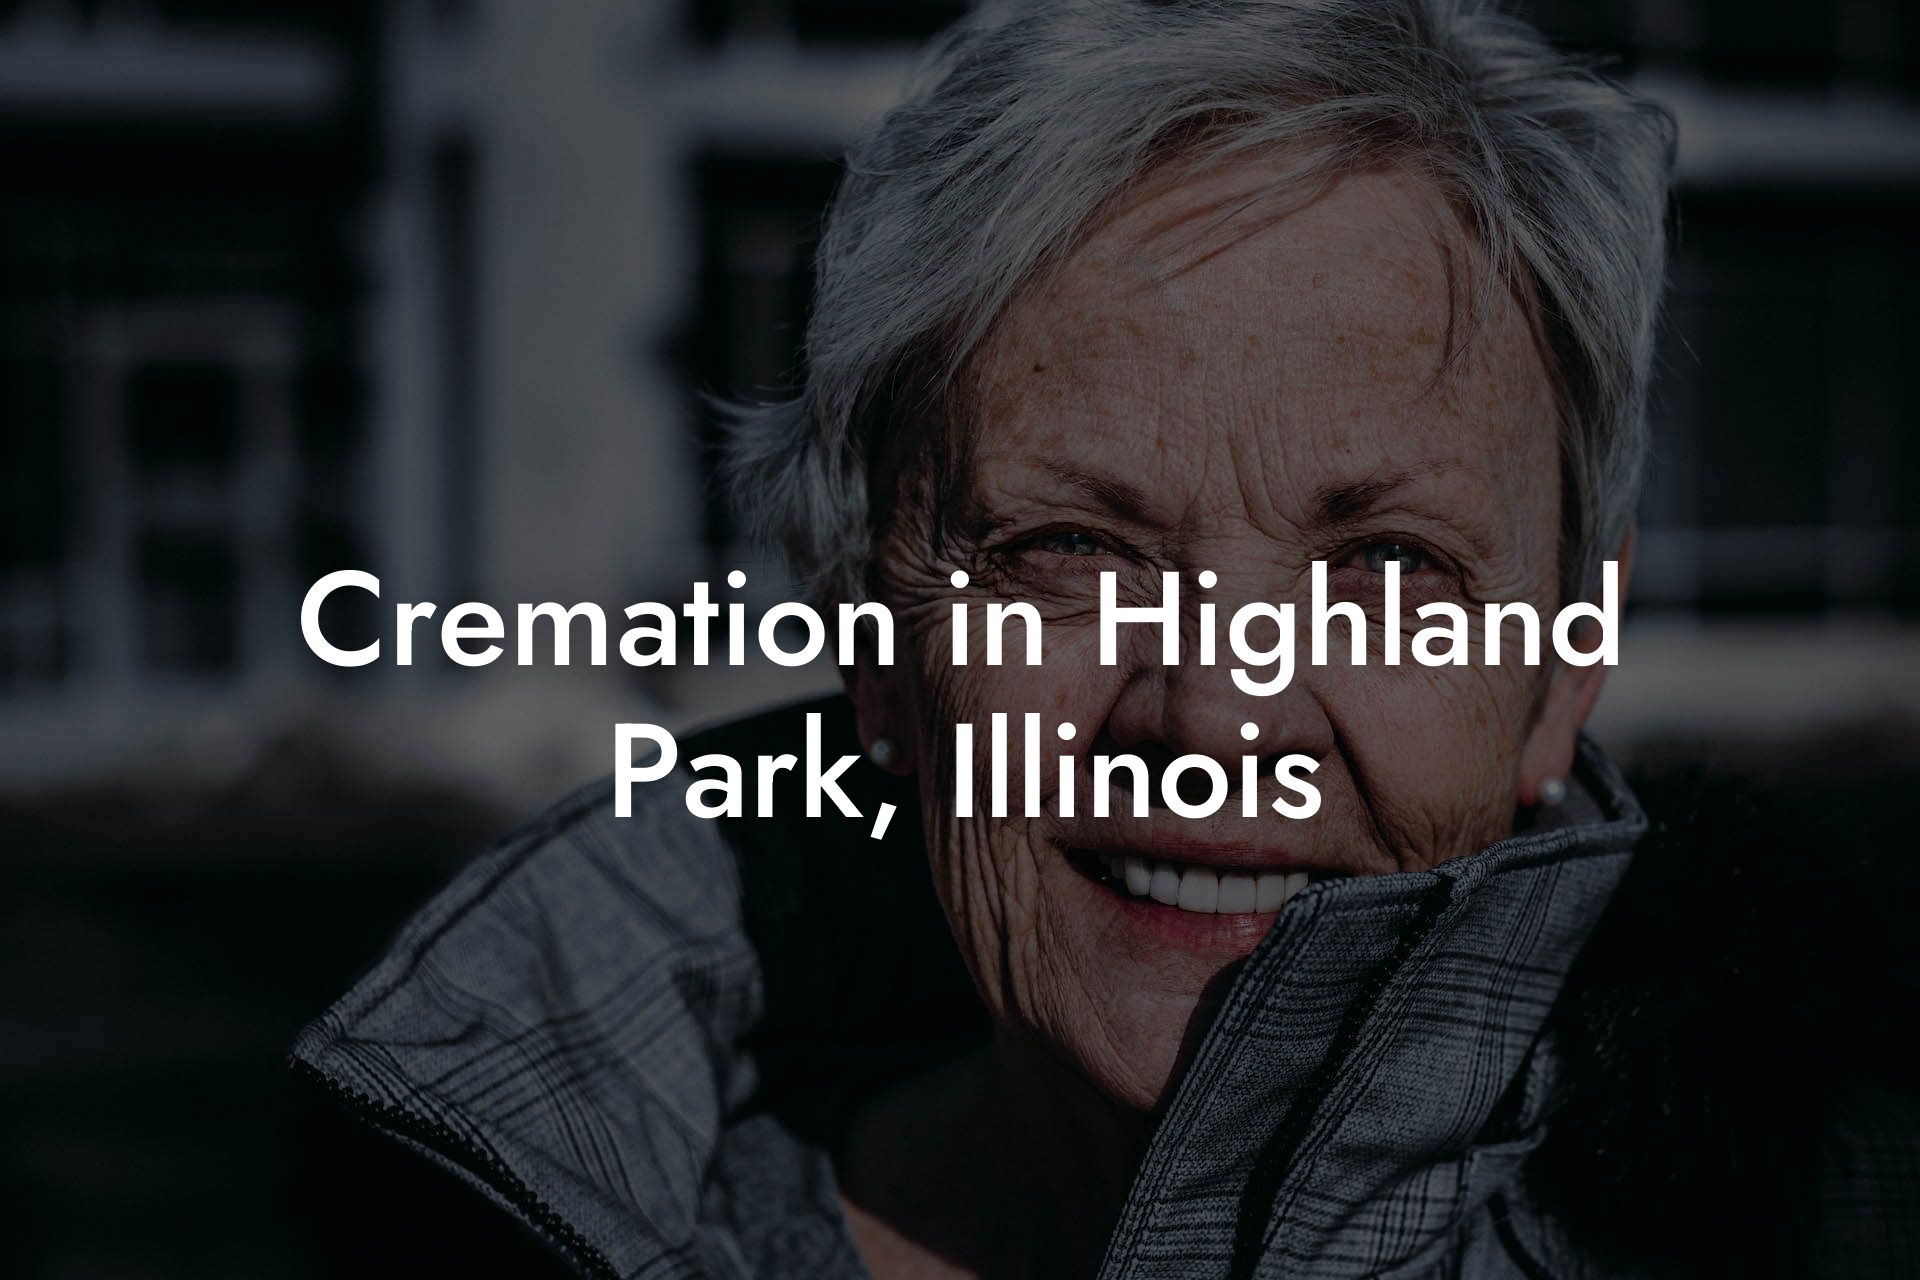 Cremation in Highland Park, Illinois